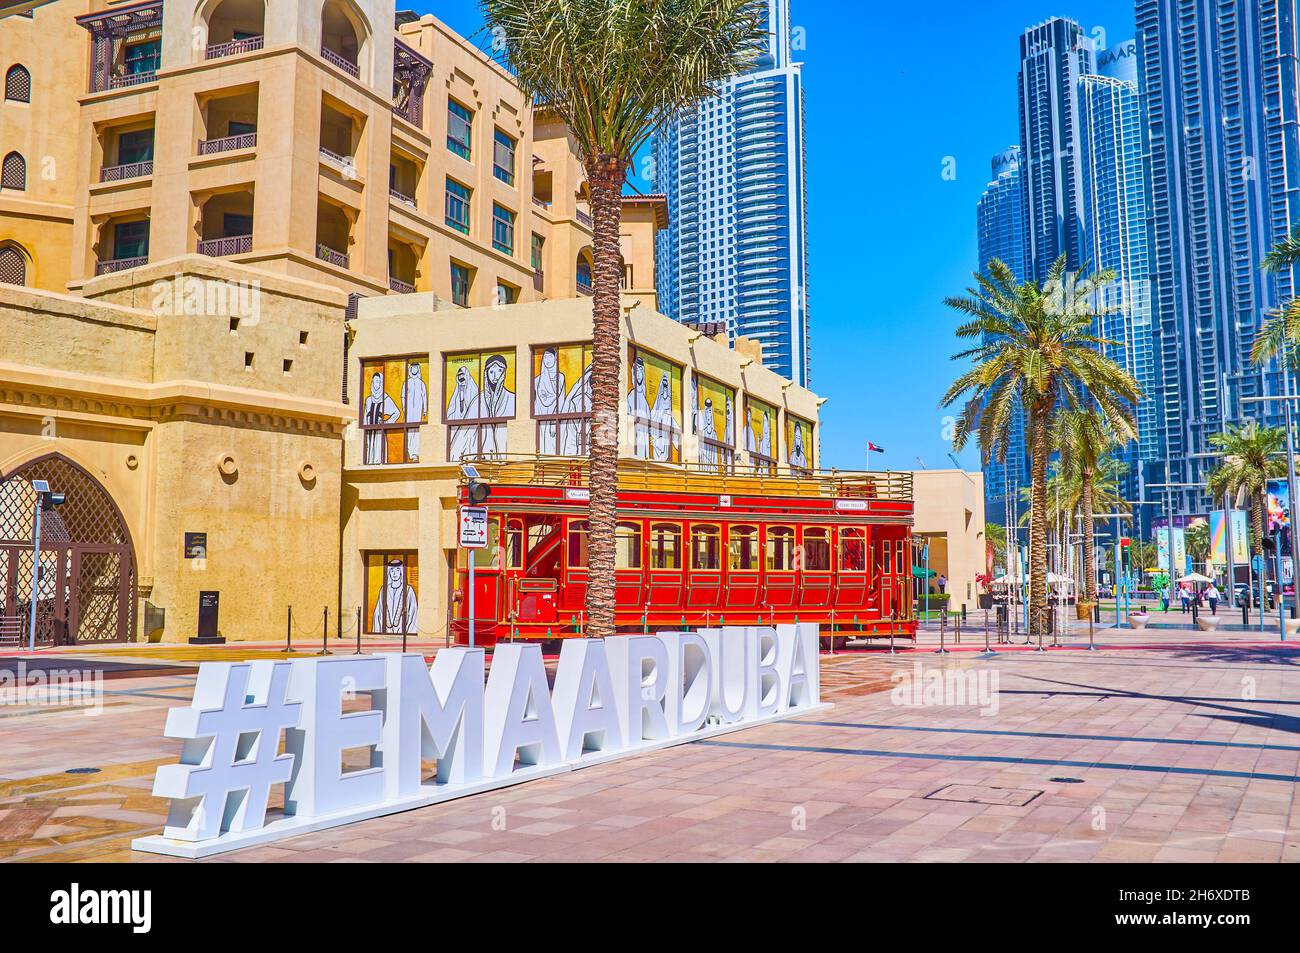 DUBAI, UAE - MARCH 3, 2020: The vintage styled Dubai Trolley city tram and the sign EmaarDubai in Sheikh Mohammed bin Rashid Boulevard in Downtown, on Stock Photo